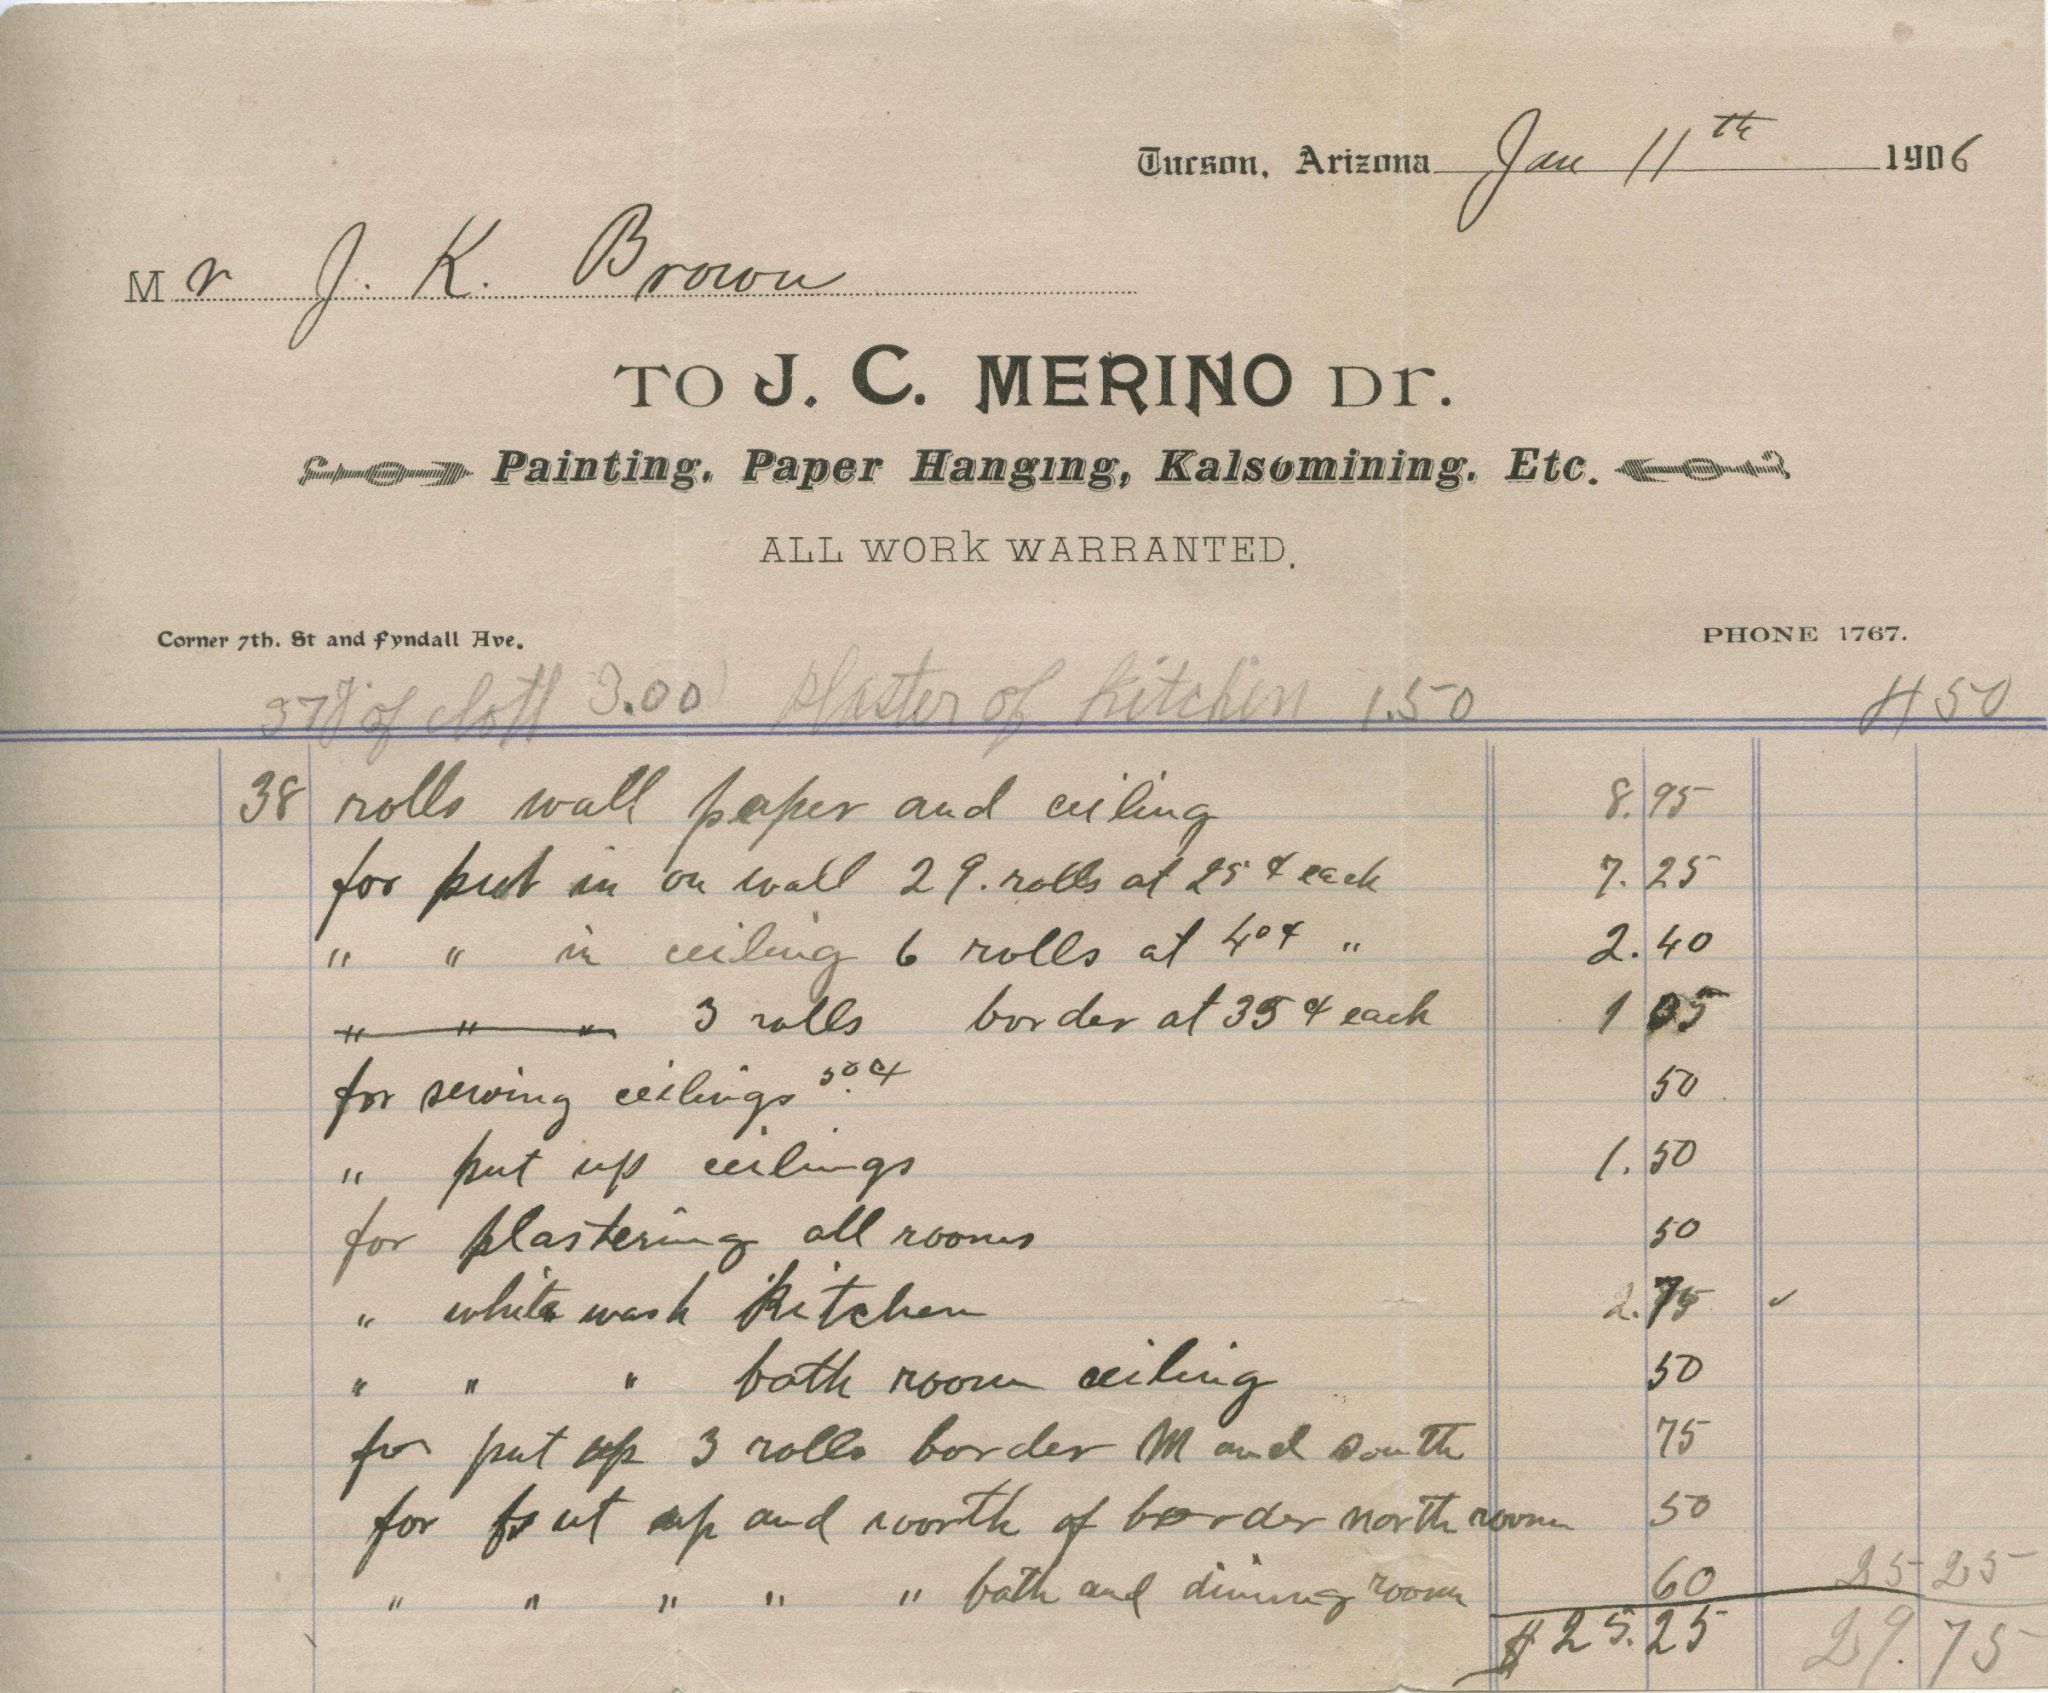 J.C. Merino Painting, Paper, Hanging, Kalsomining, Etc. 1906 Letterhead